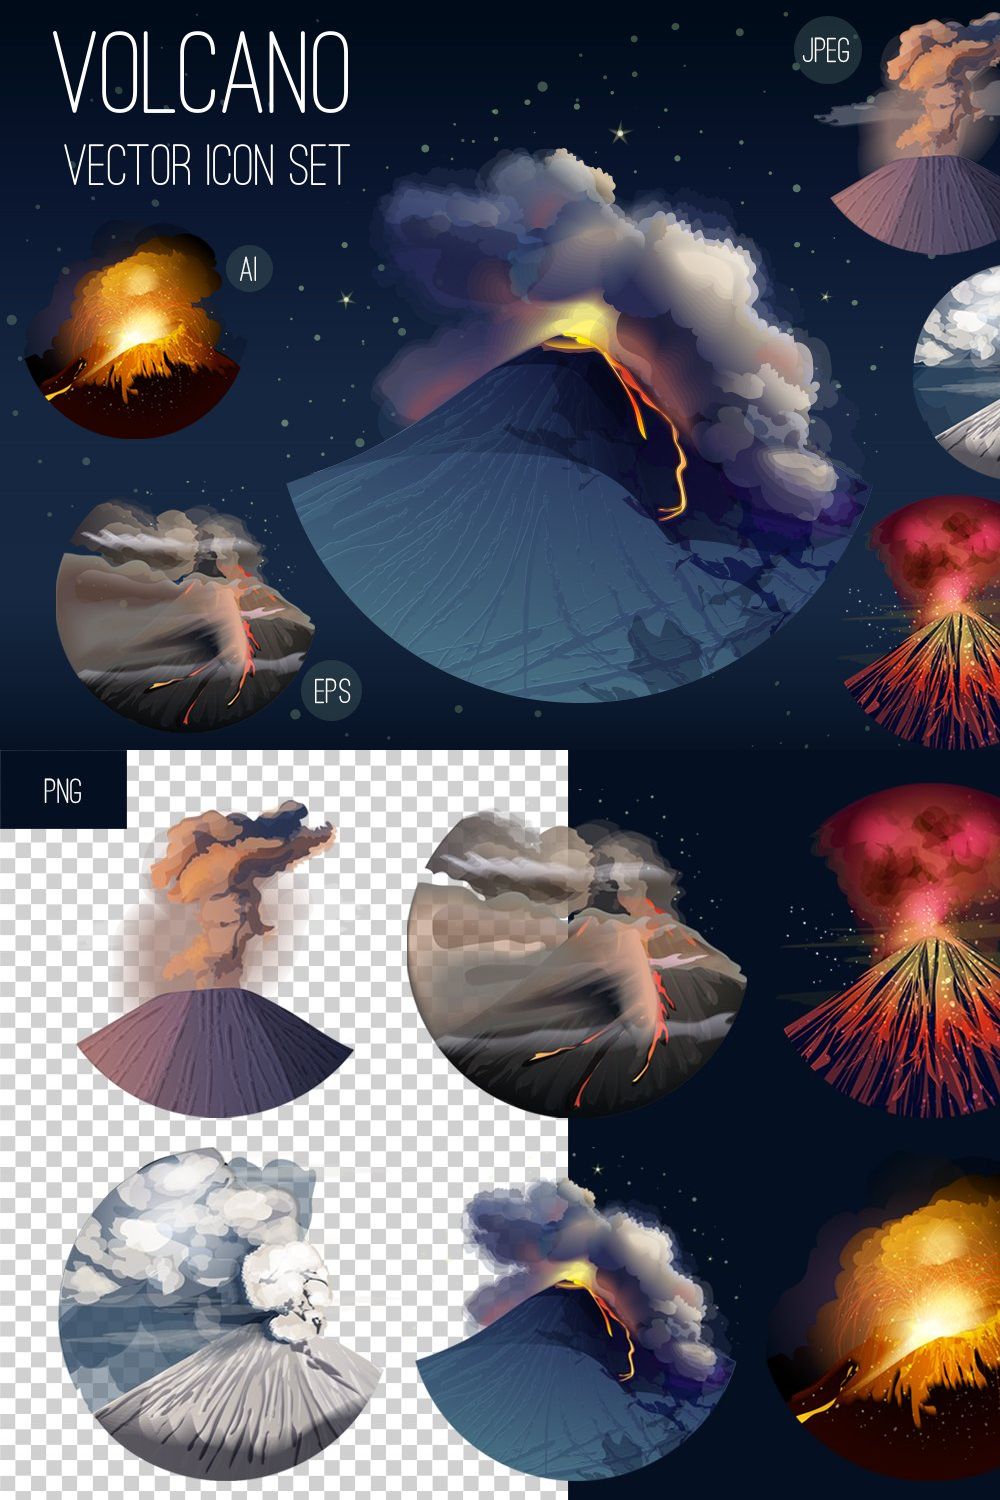 Volcano icon set. pinterest preview image.